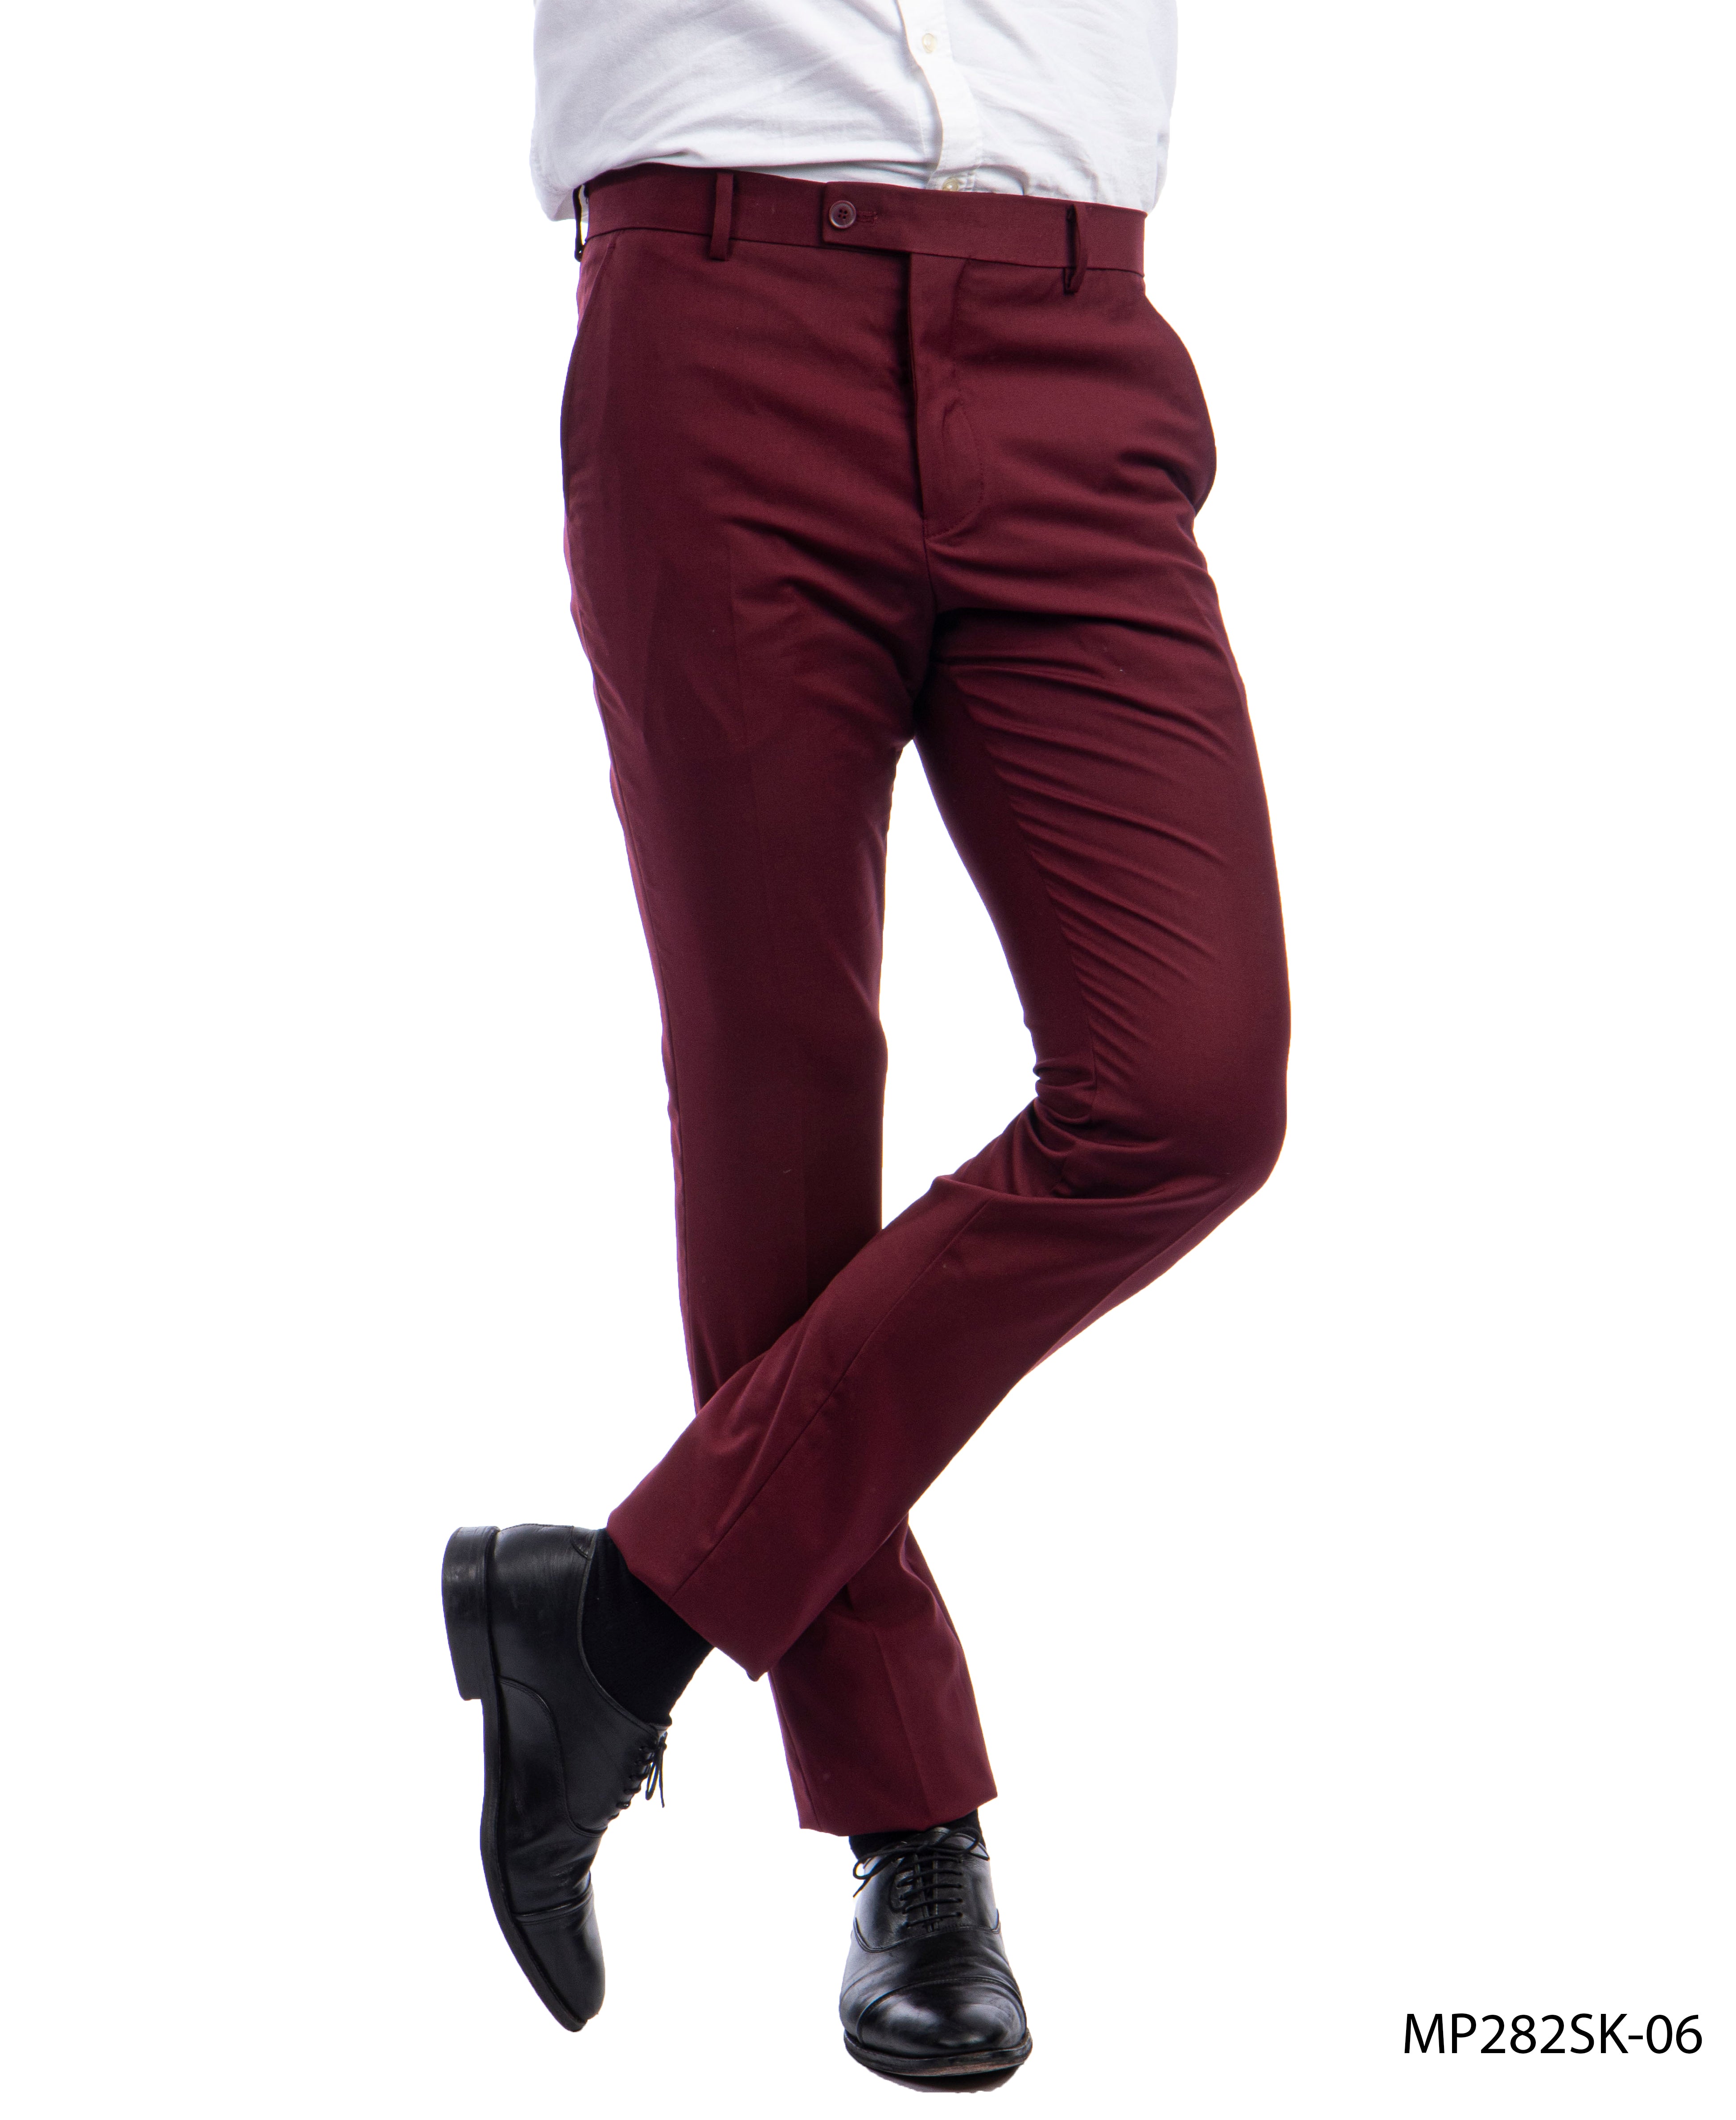 burgundy dress pants